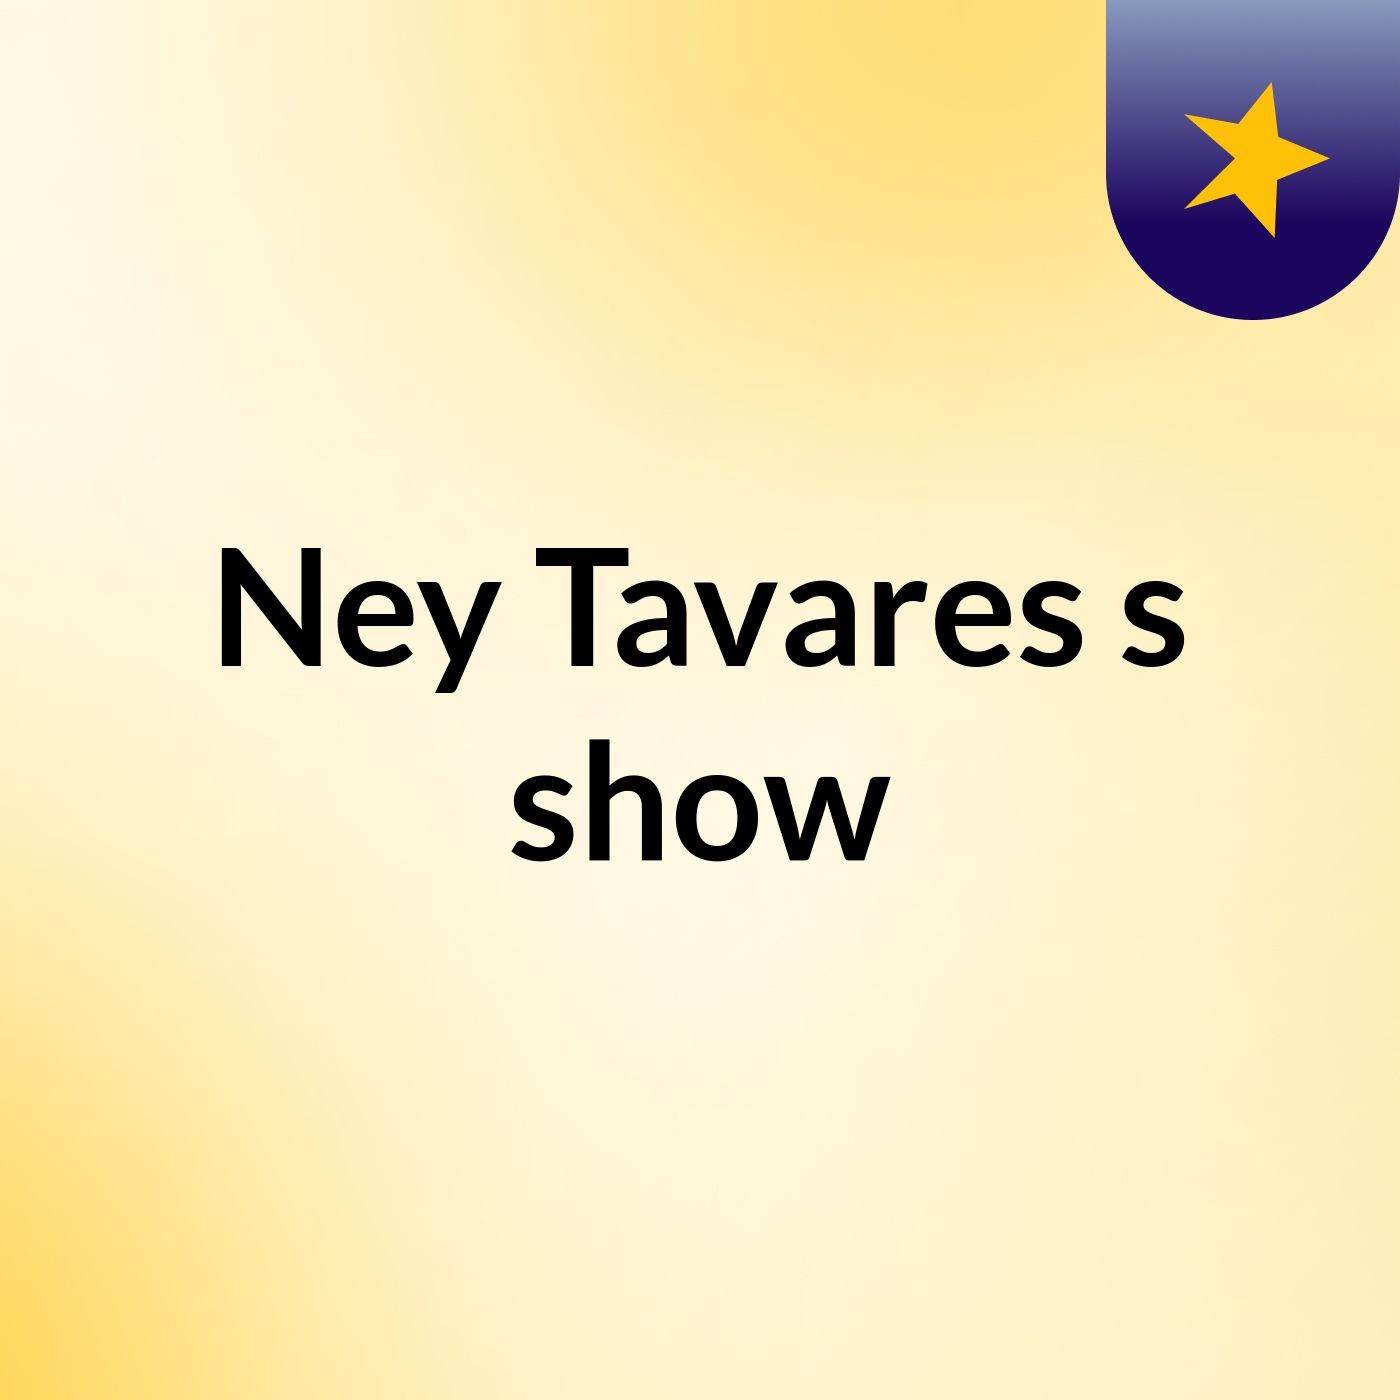 Ney Tavares's show